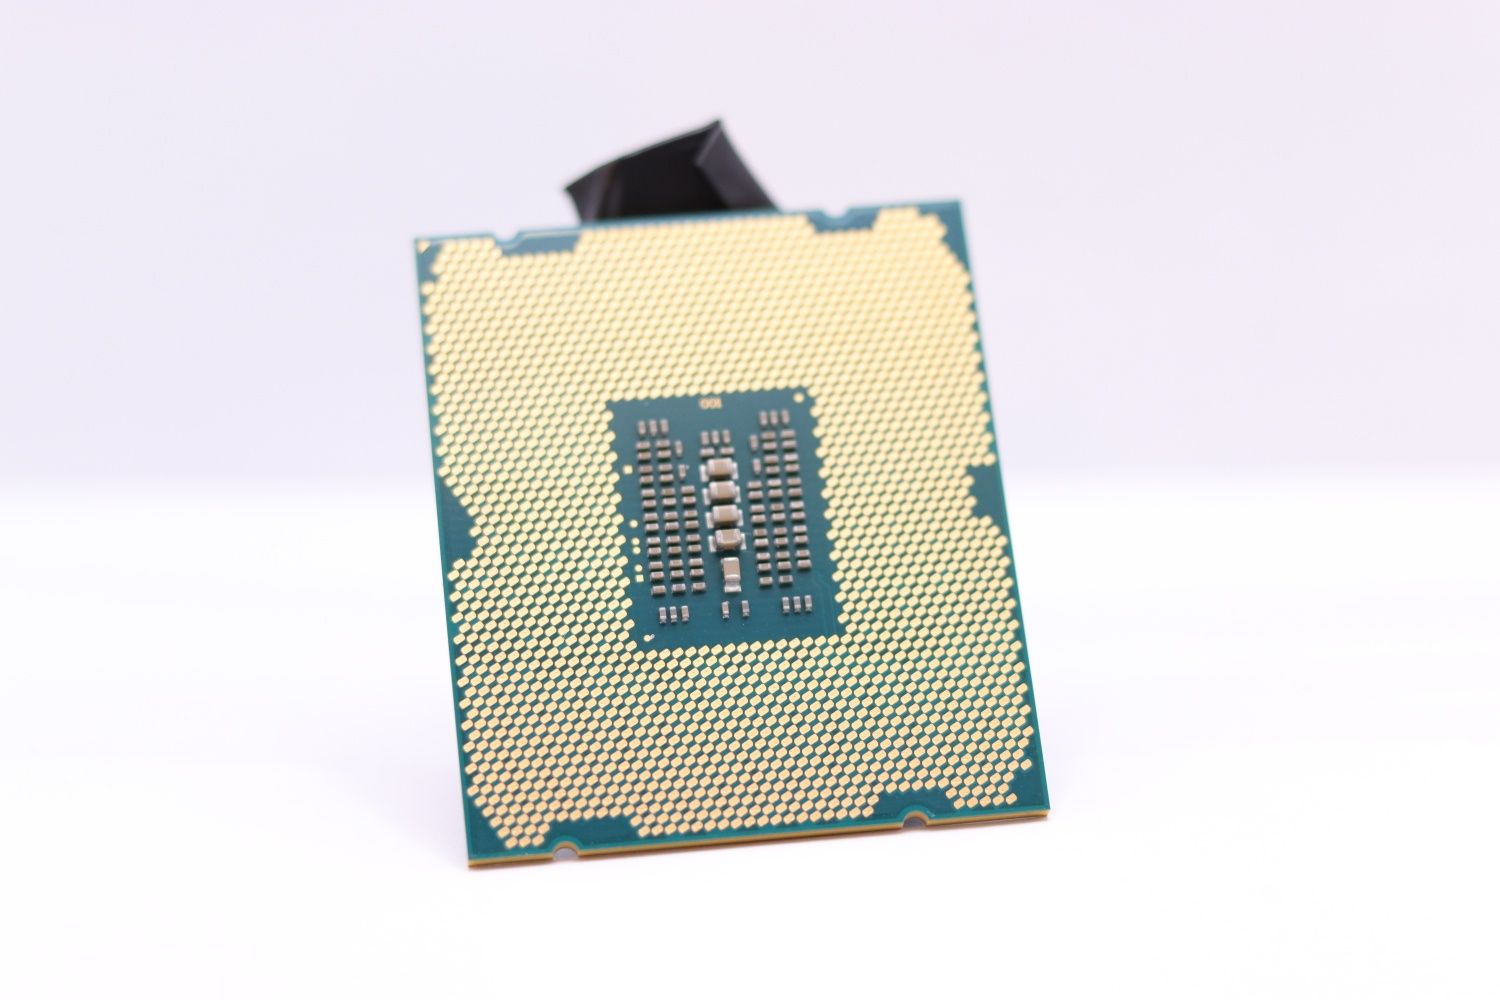 Procesor Intel Xeon E5-2650 V2 8 Core 2.6/3.4 GHz Socket 2011-3